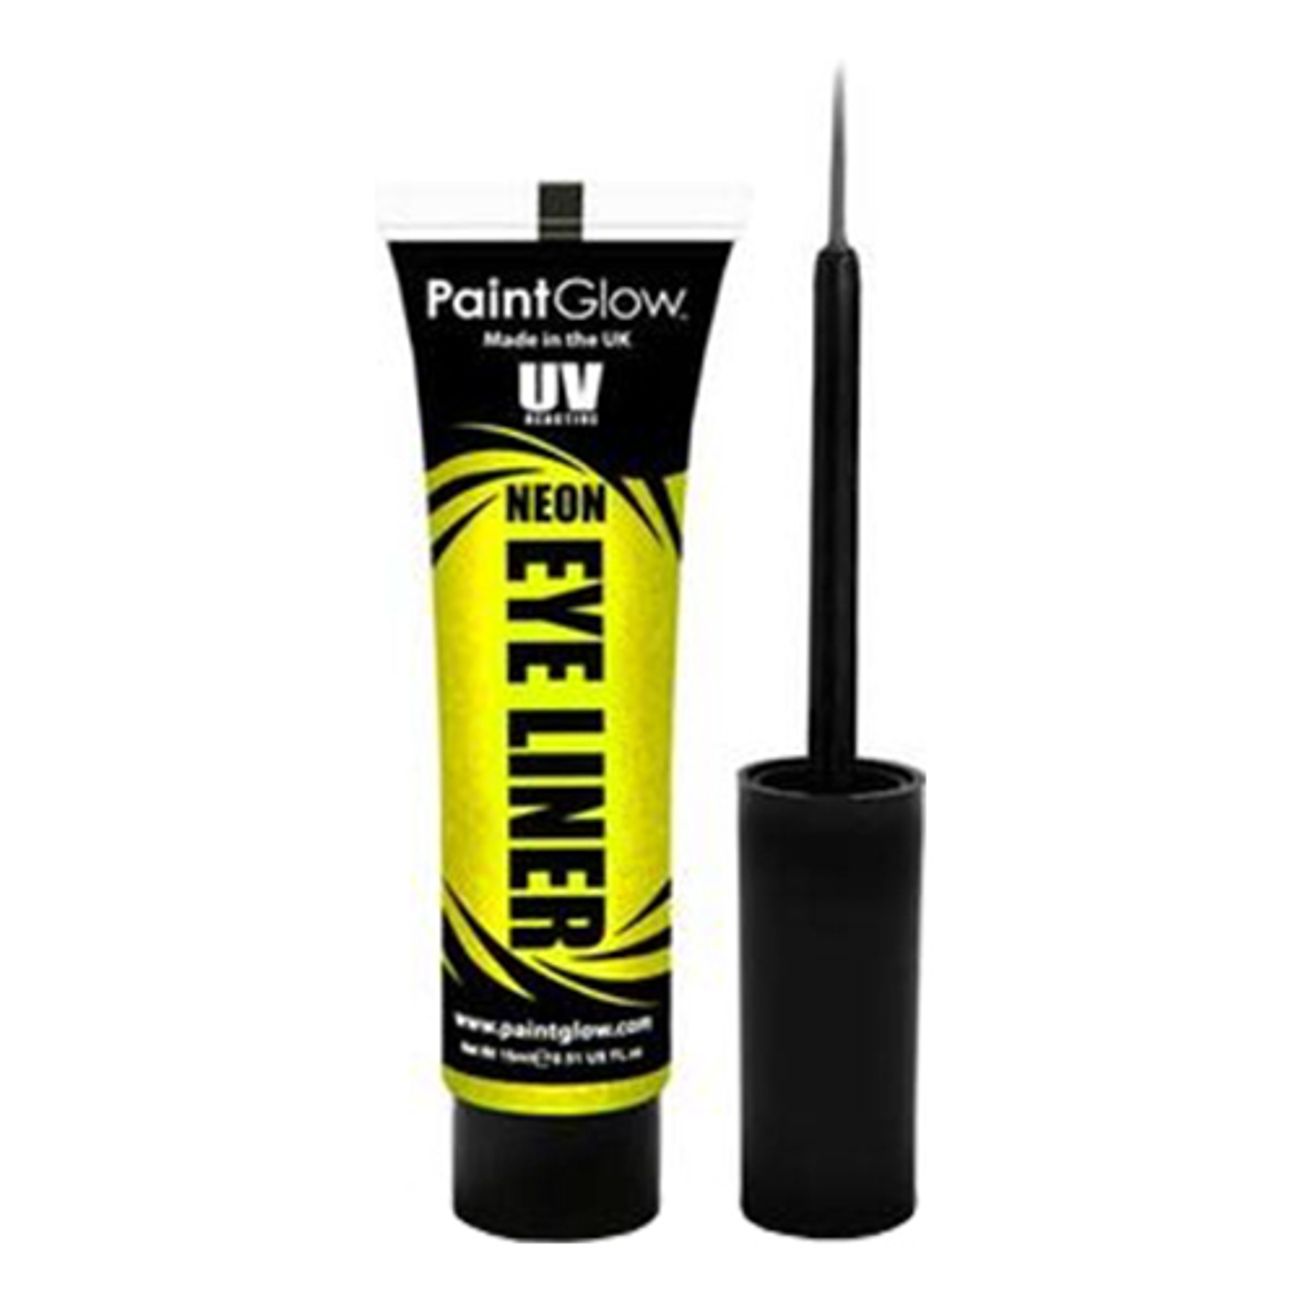 paintglow-uv-eyeliner-4